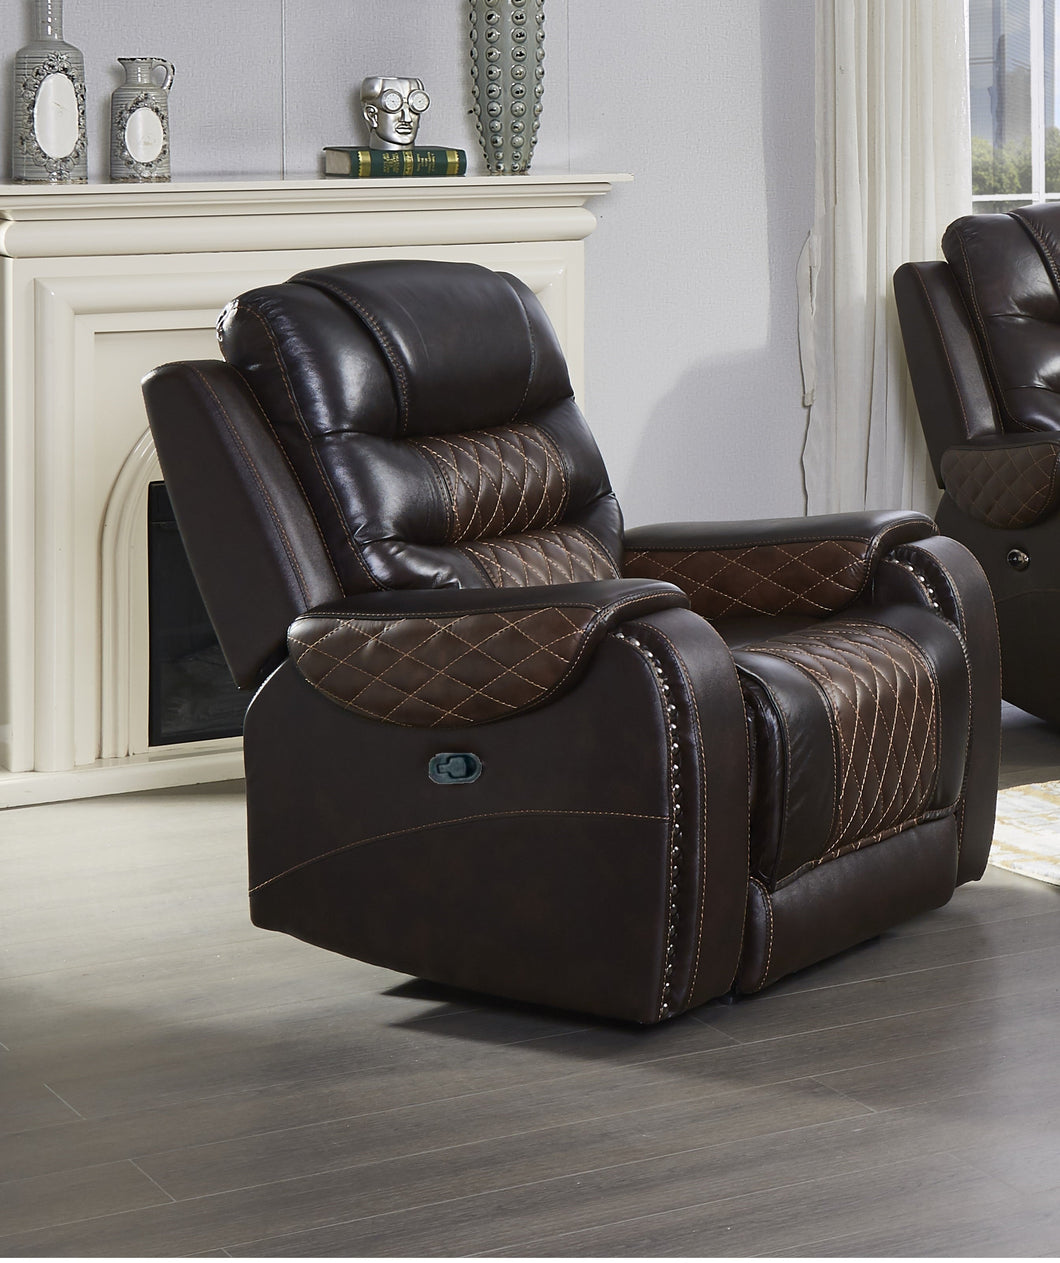 BTExpert Manual Recliner Chair , Headrest Upholstered Two Tone Dark Light Brown Top Grain Leather Reclining Chair